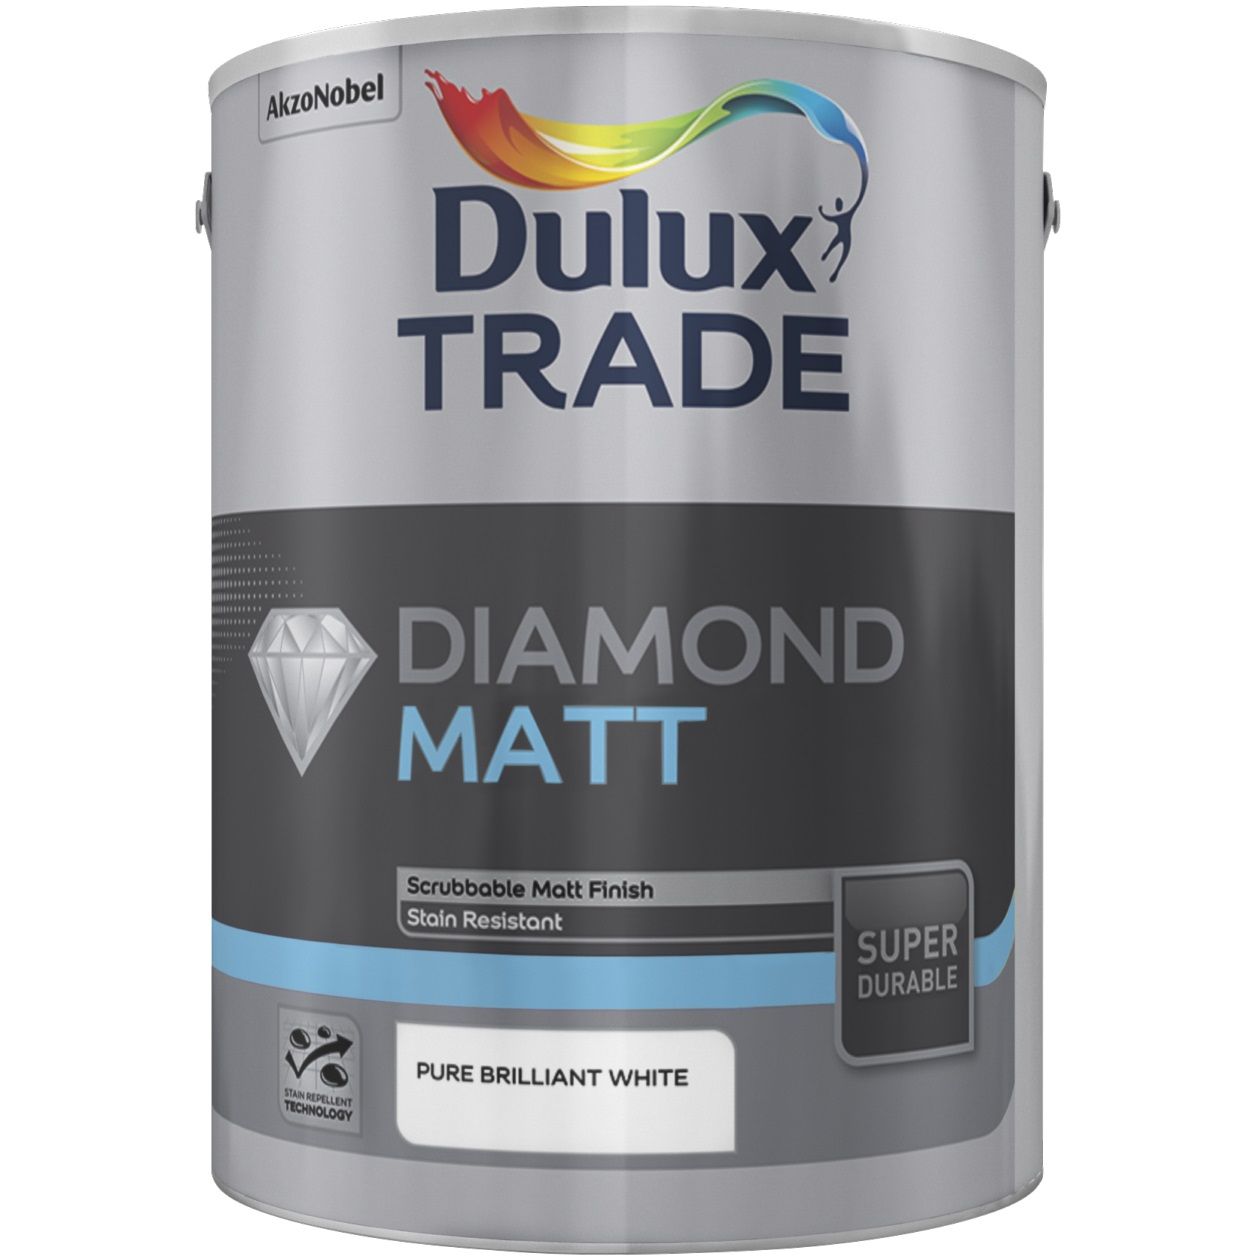 DULUX TRADE DIAMOND MATT £30.01-£136.42